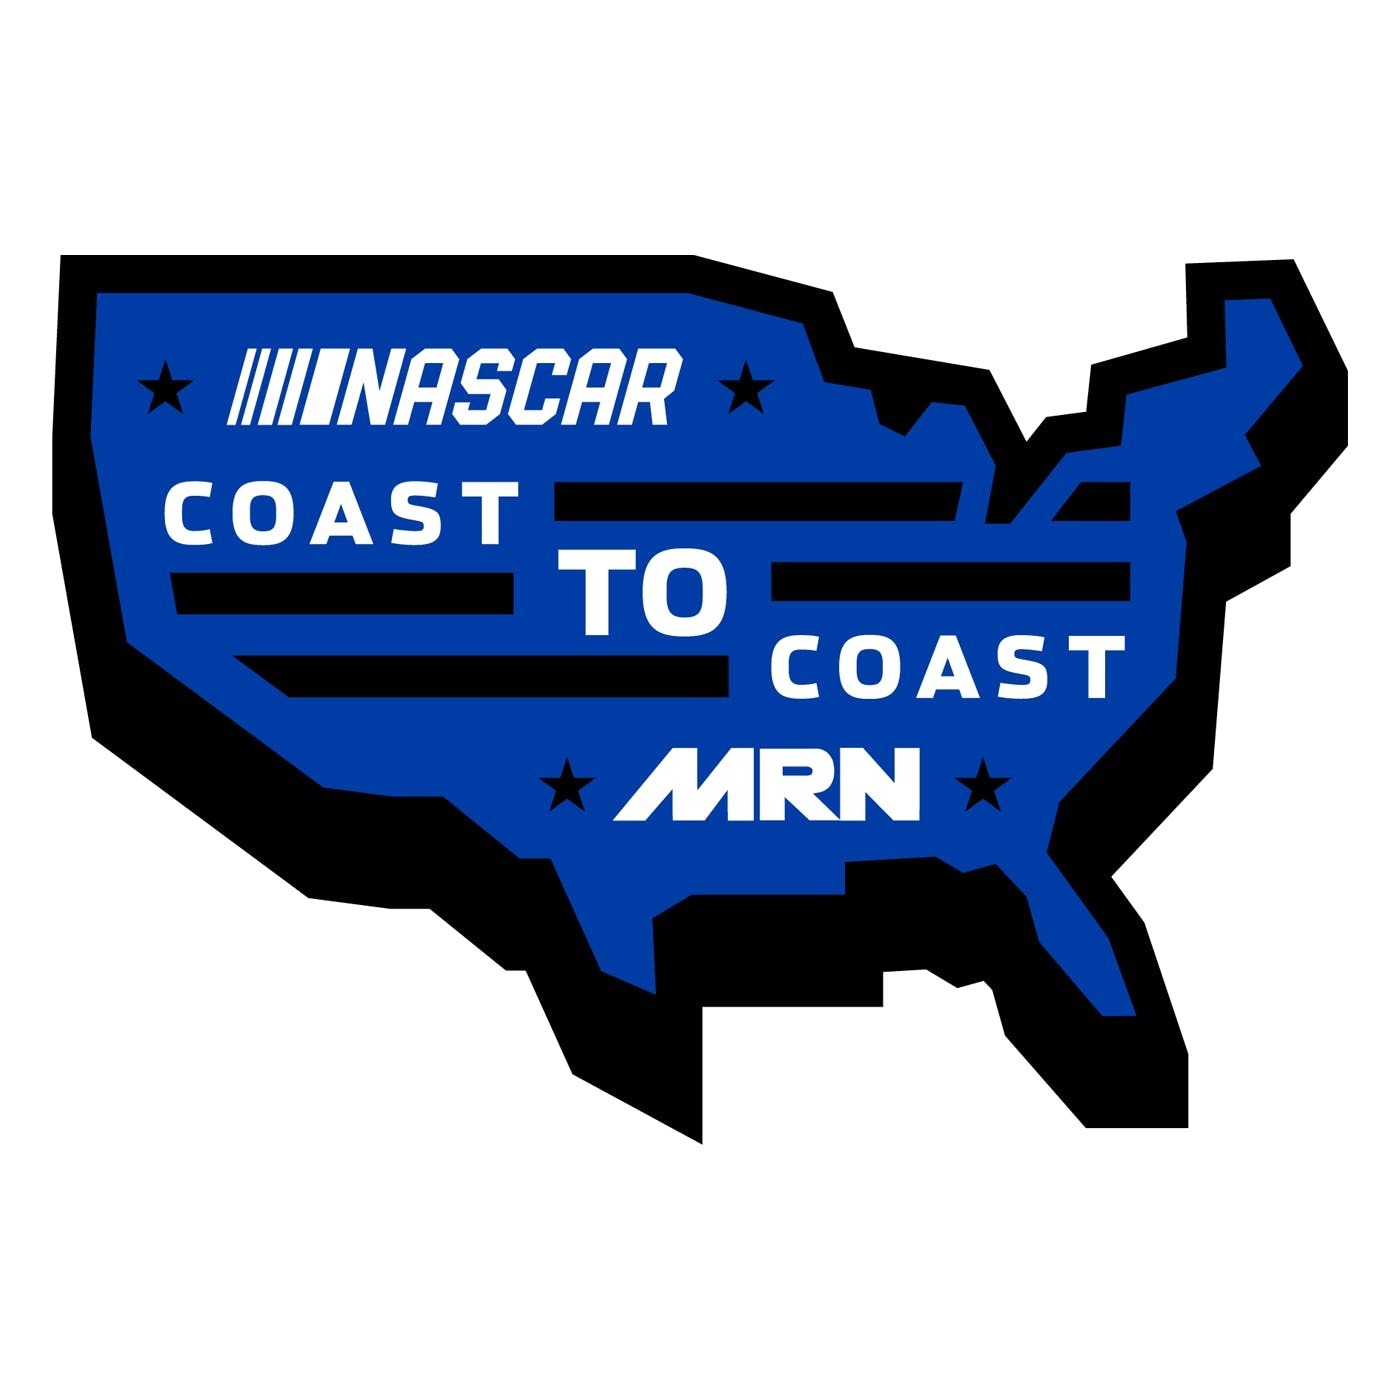 NASCAR Coast to Coast - Ryan Unzicker